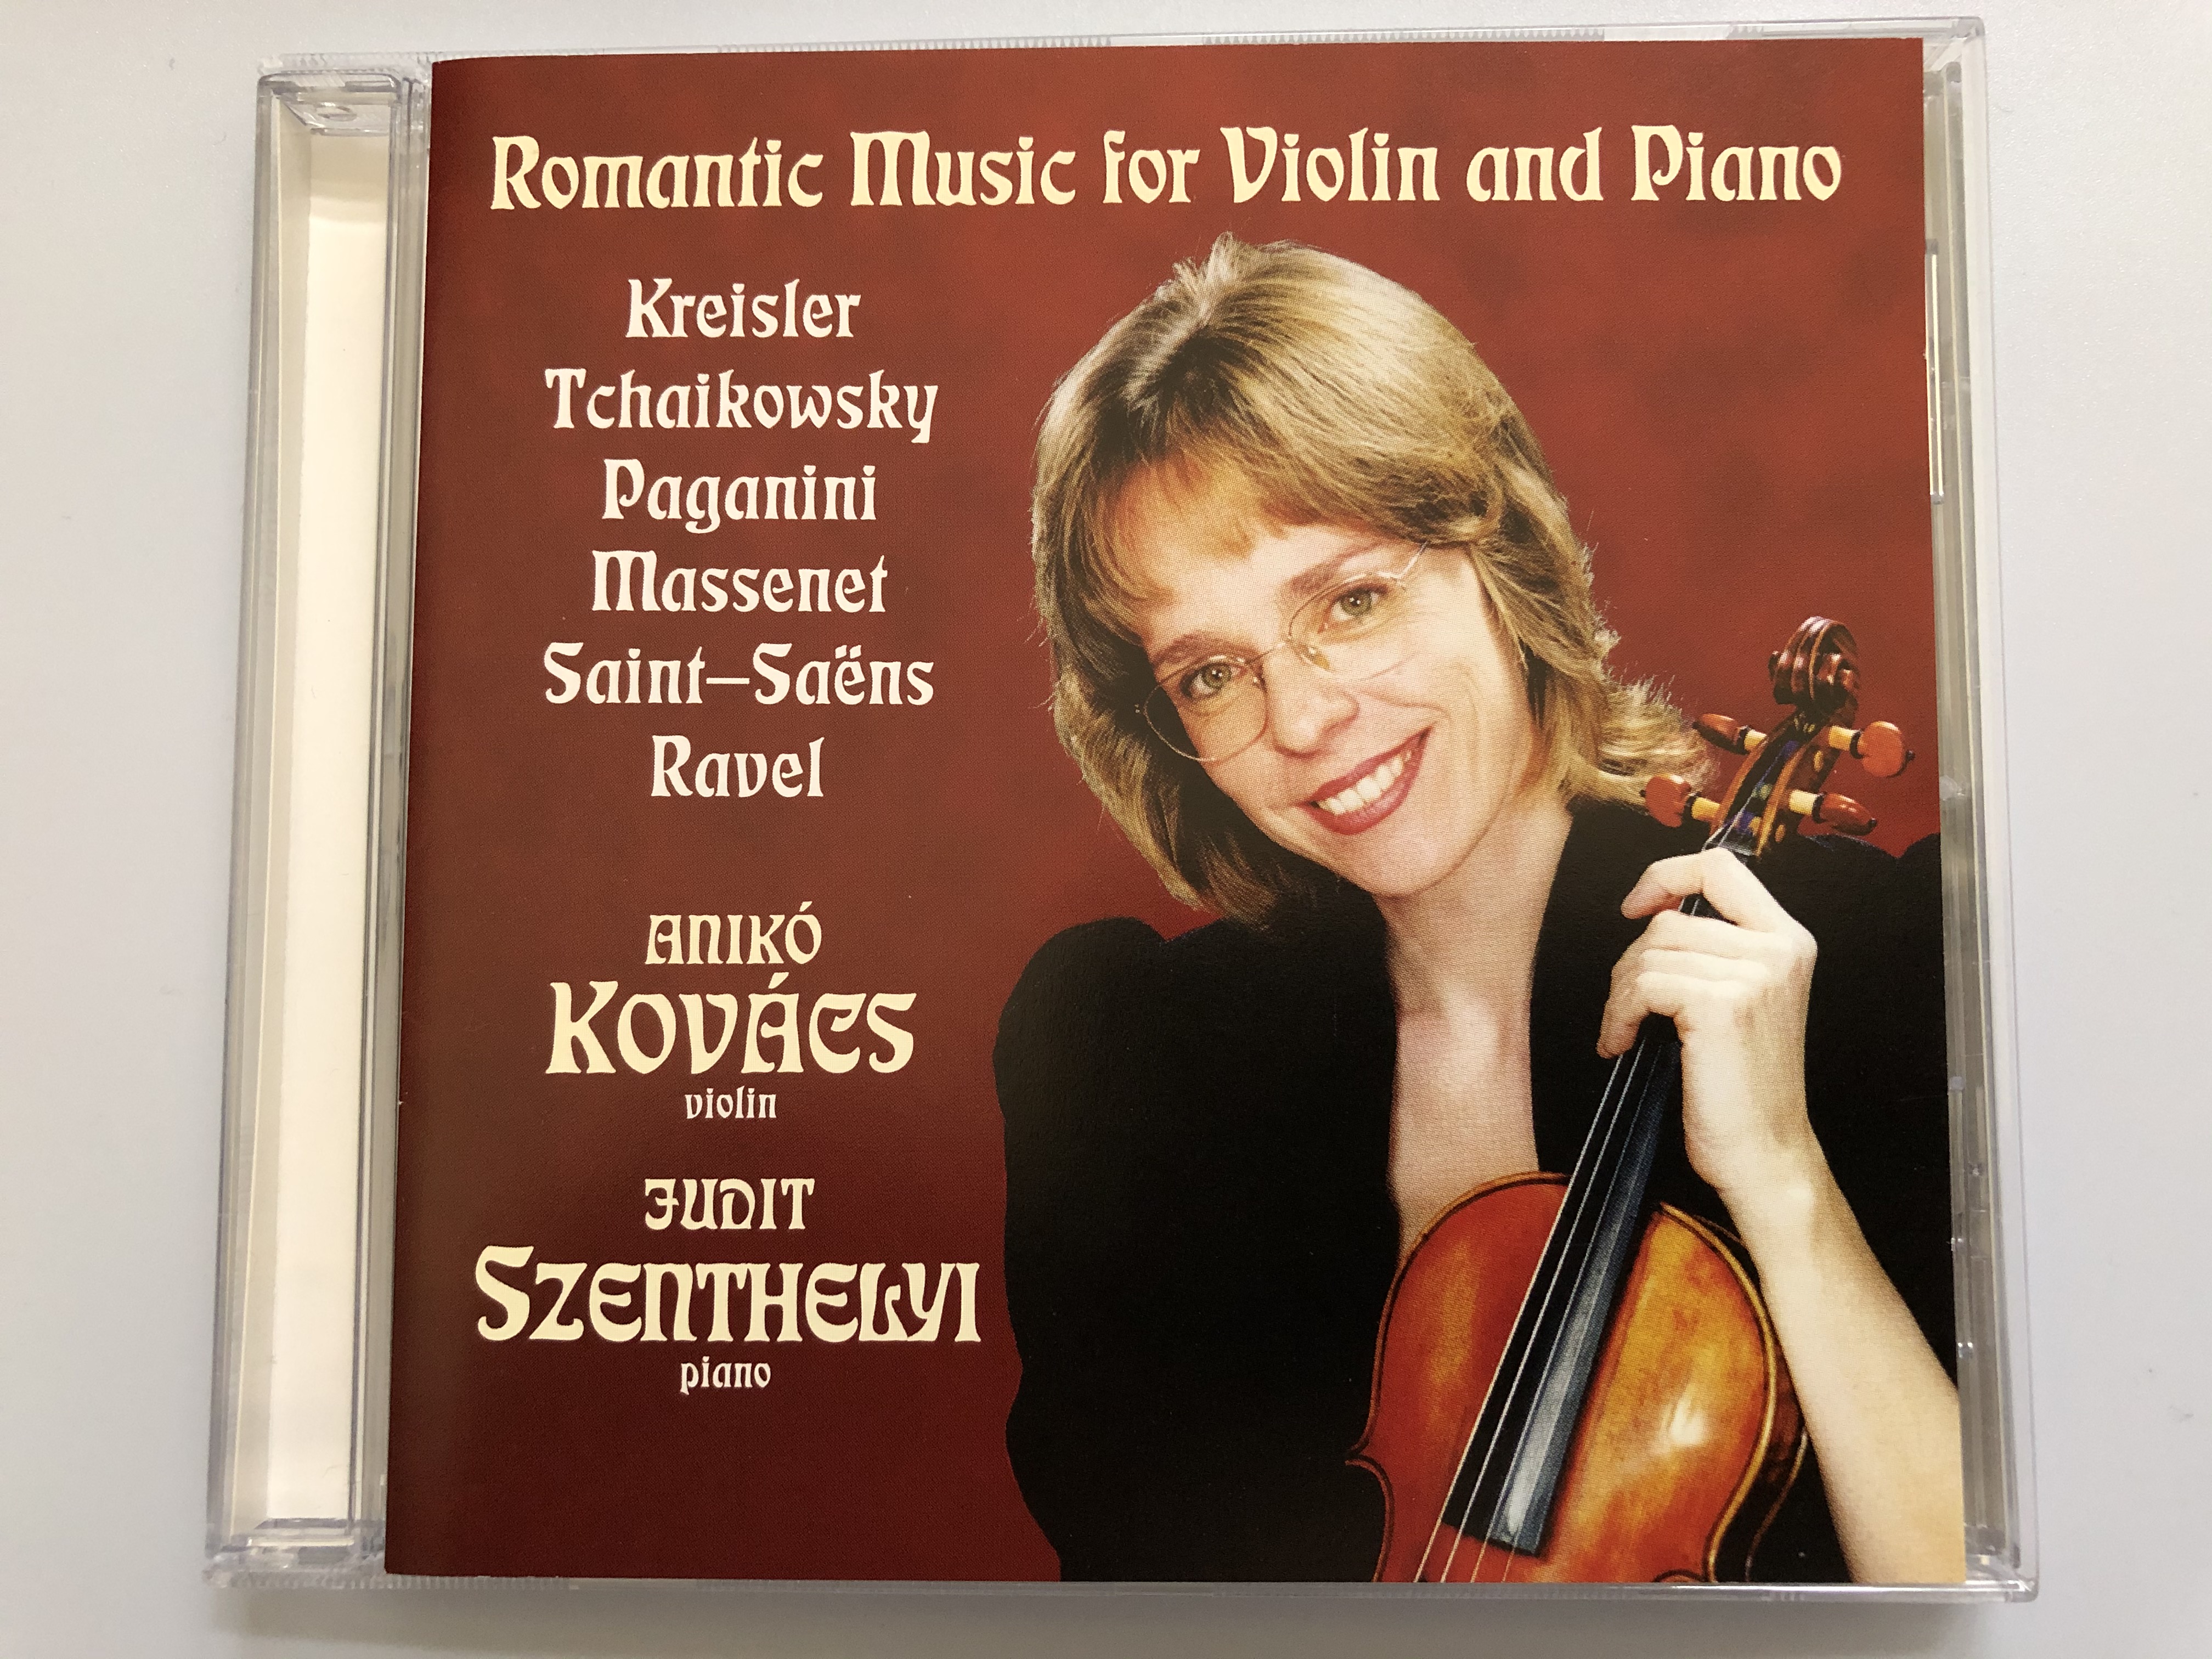 romantic-music-for-violin-and-piano-kreisler-tchaikovsky-paganini-massenet-saint-saens-ravel-aniko-kovacs-violin-judit-szenthelyi-piano-audio-cd-2000-stereo-anni-6892-1-.jpg